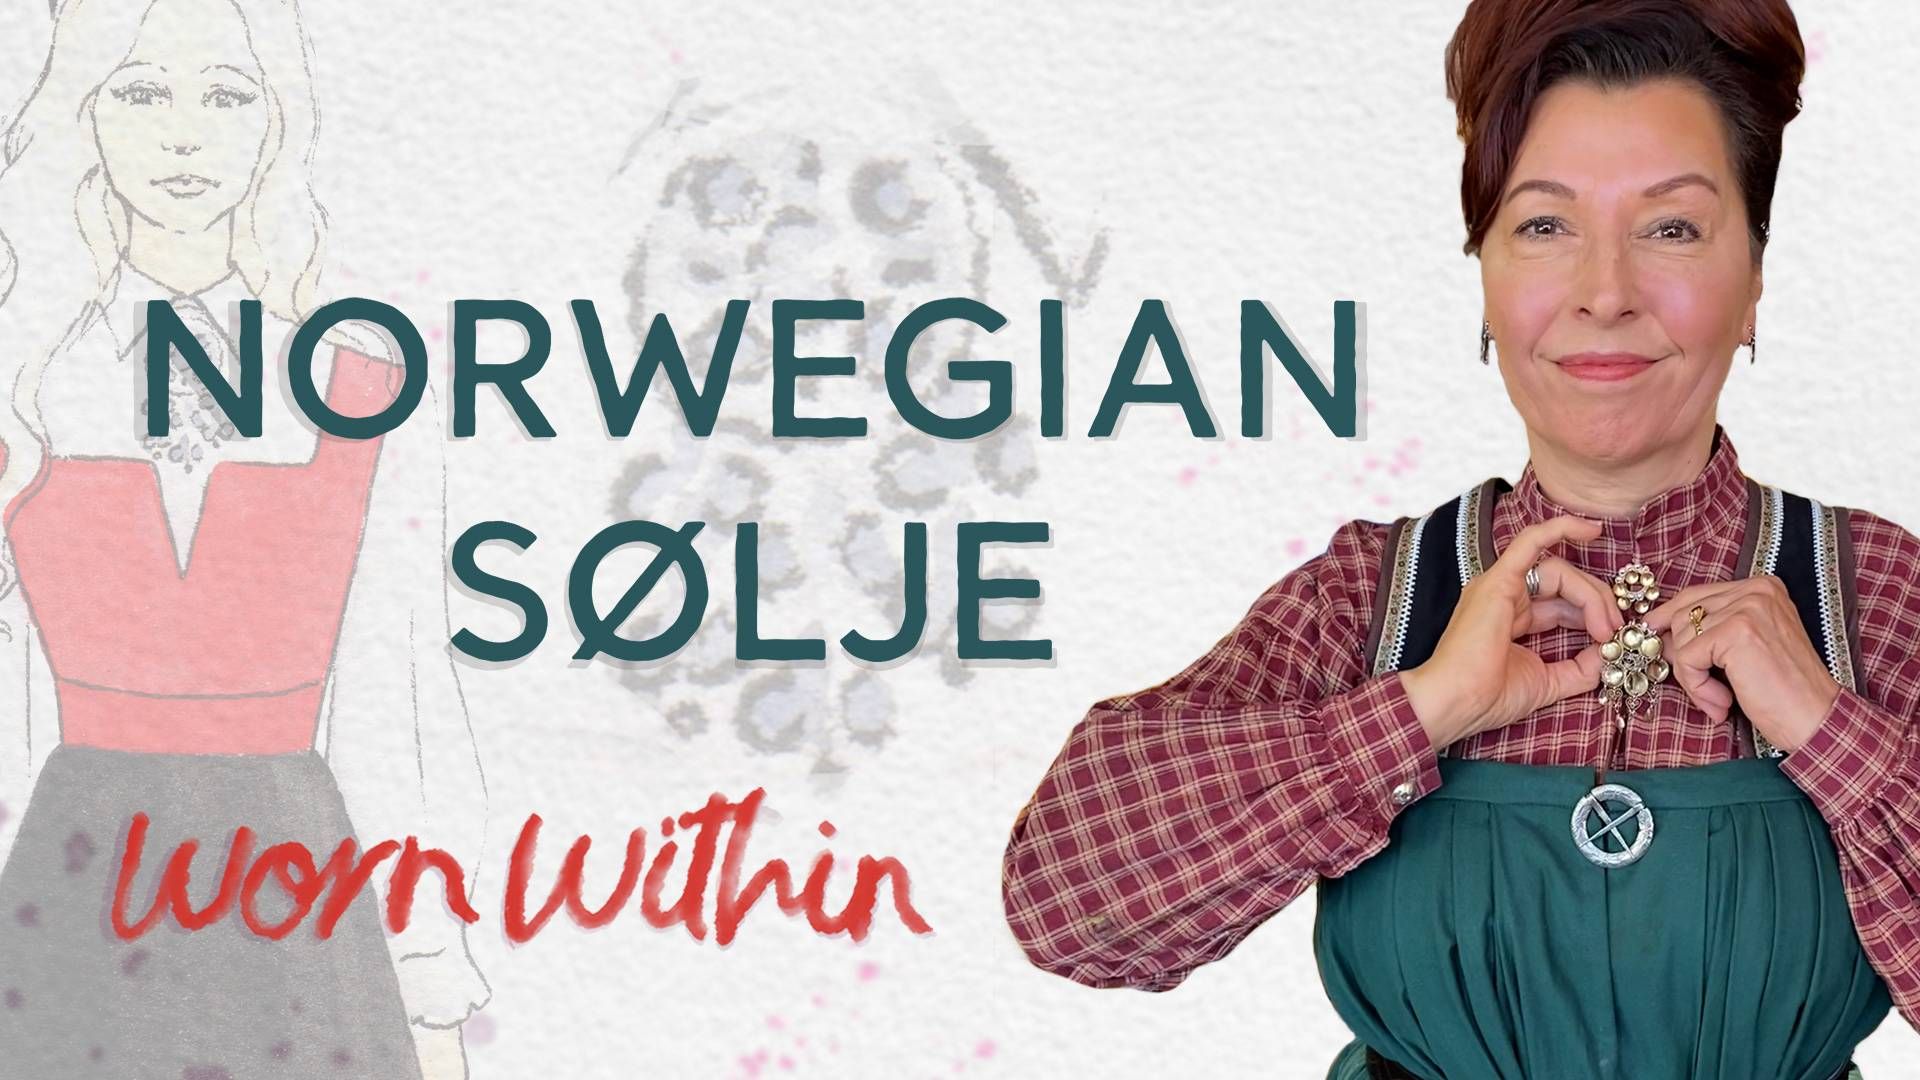 Worn Within: How did Sølje become Norwegian heirlooms?